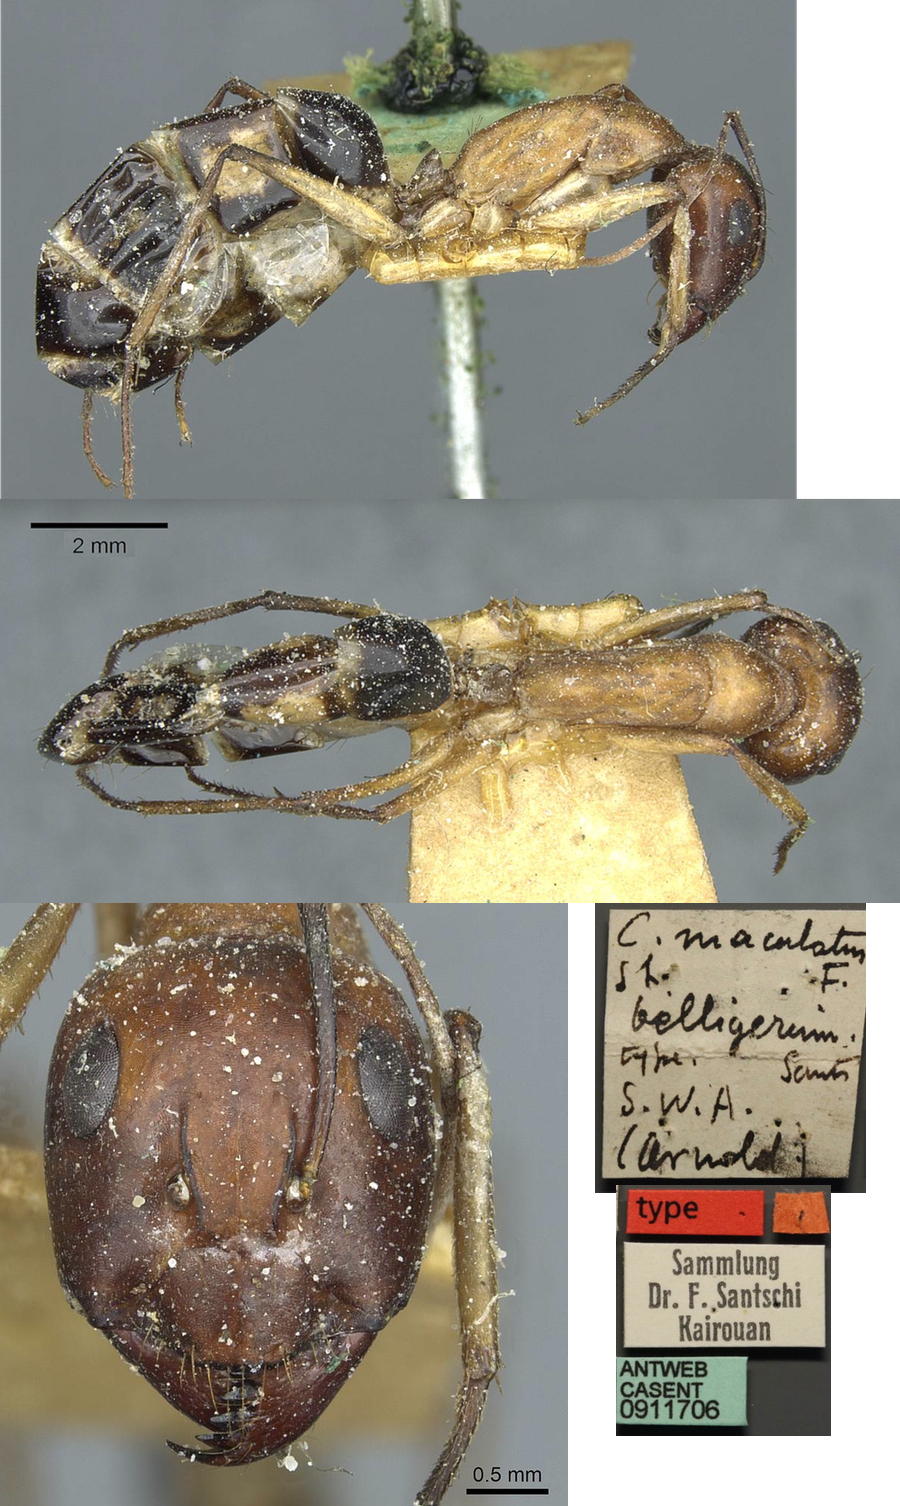 Camponotus belligerus major